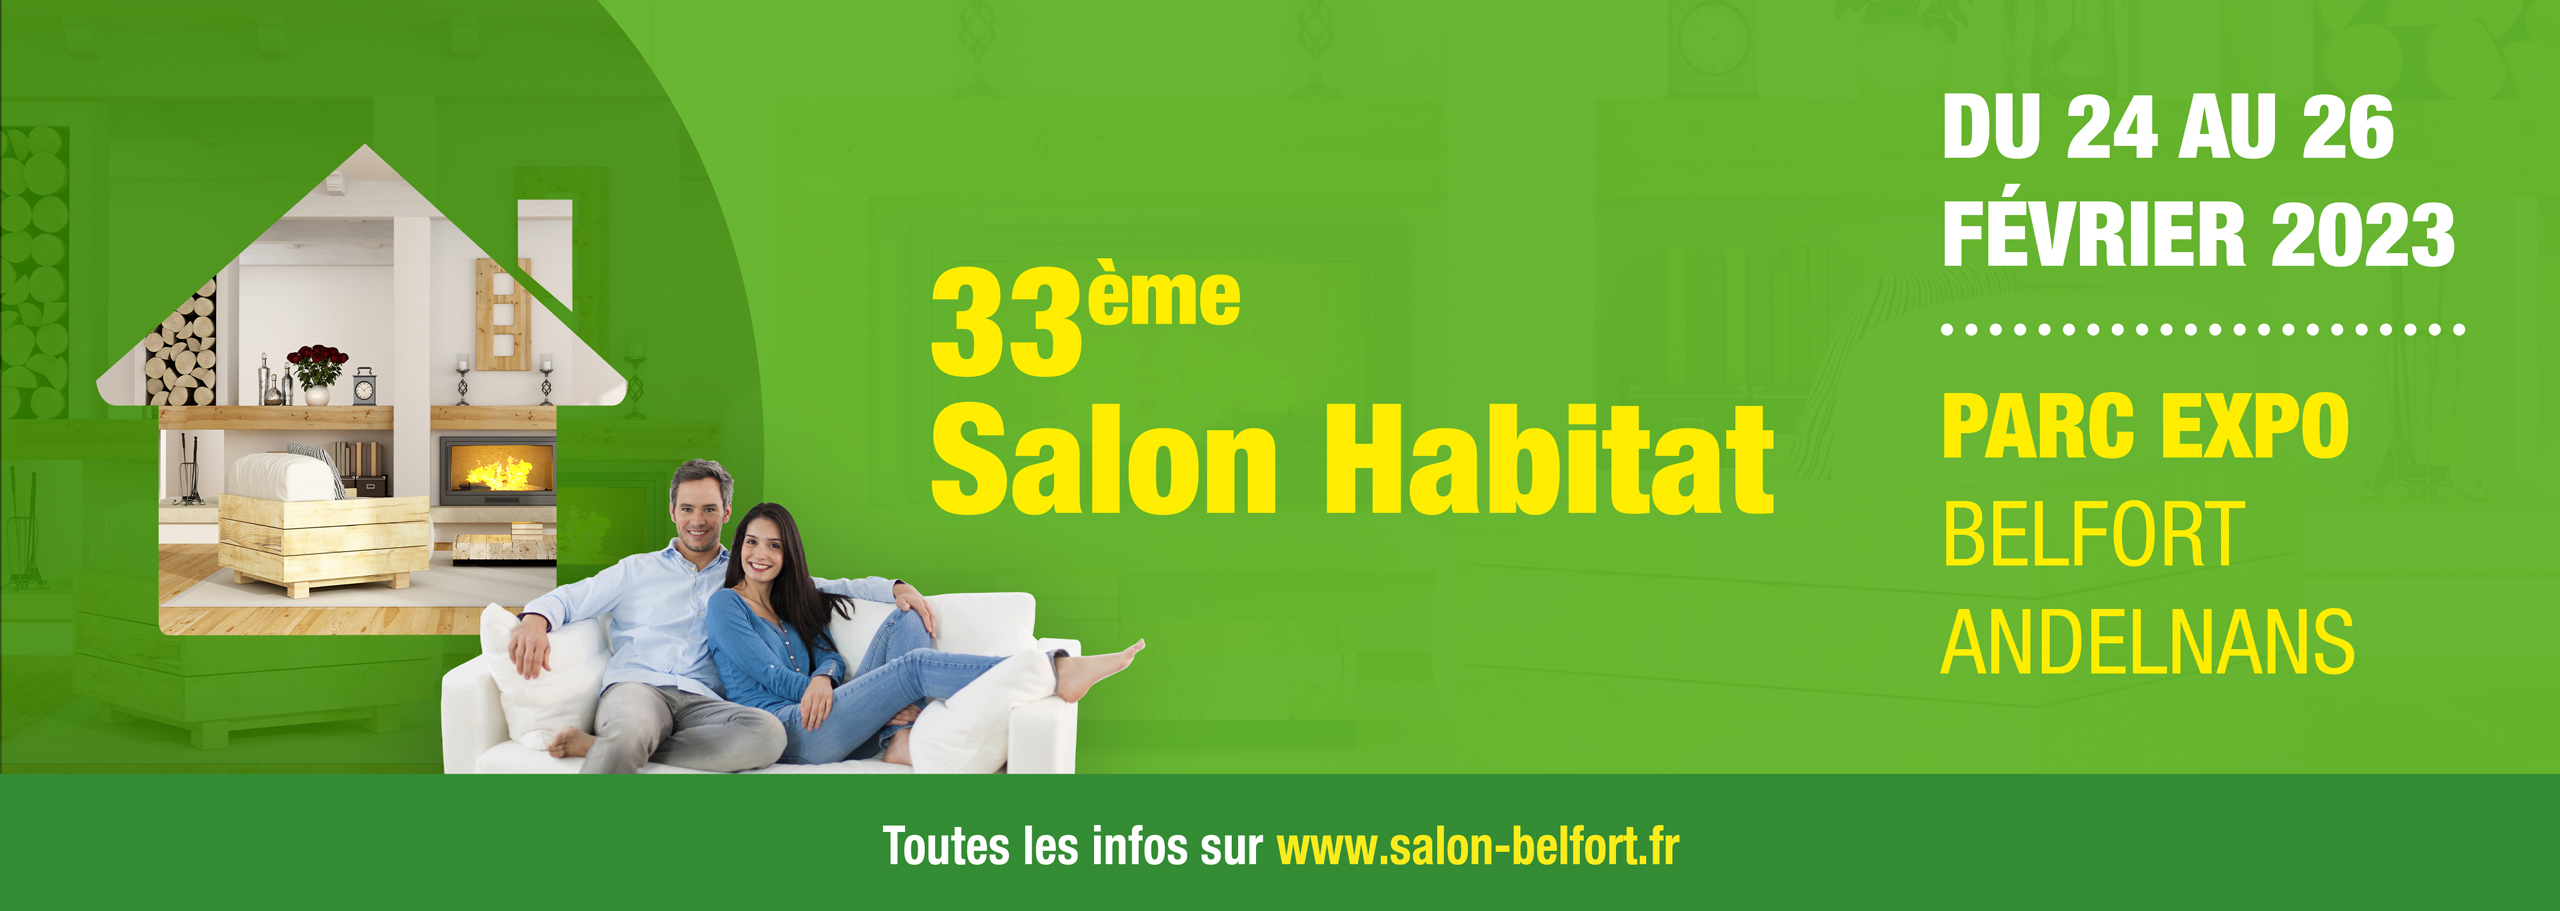 slider-salon-habitat-belfort-2023_V2